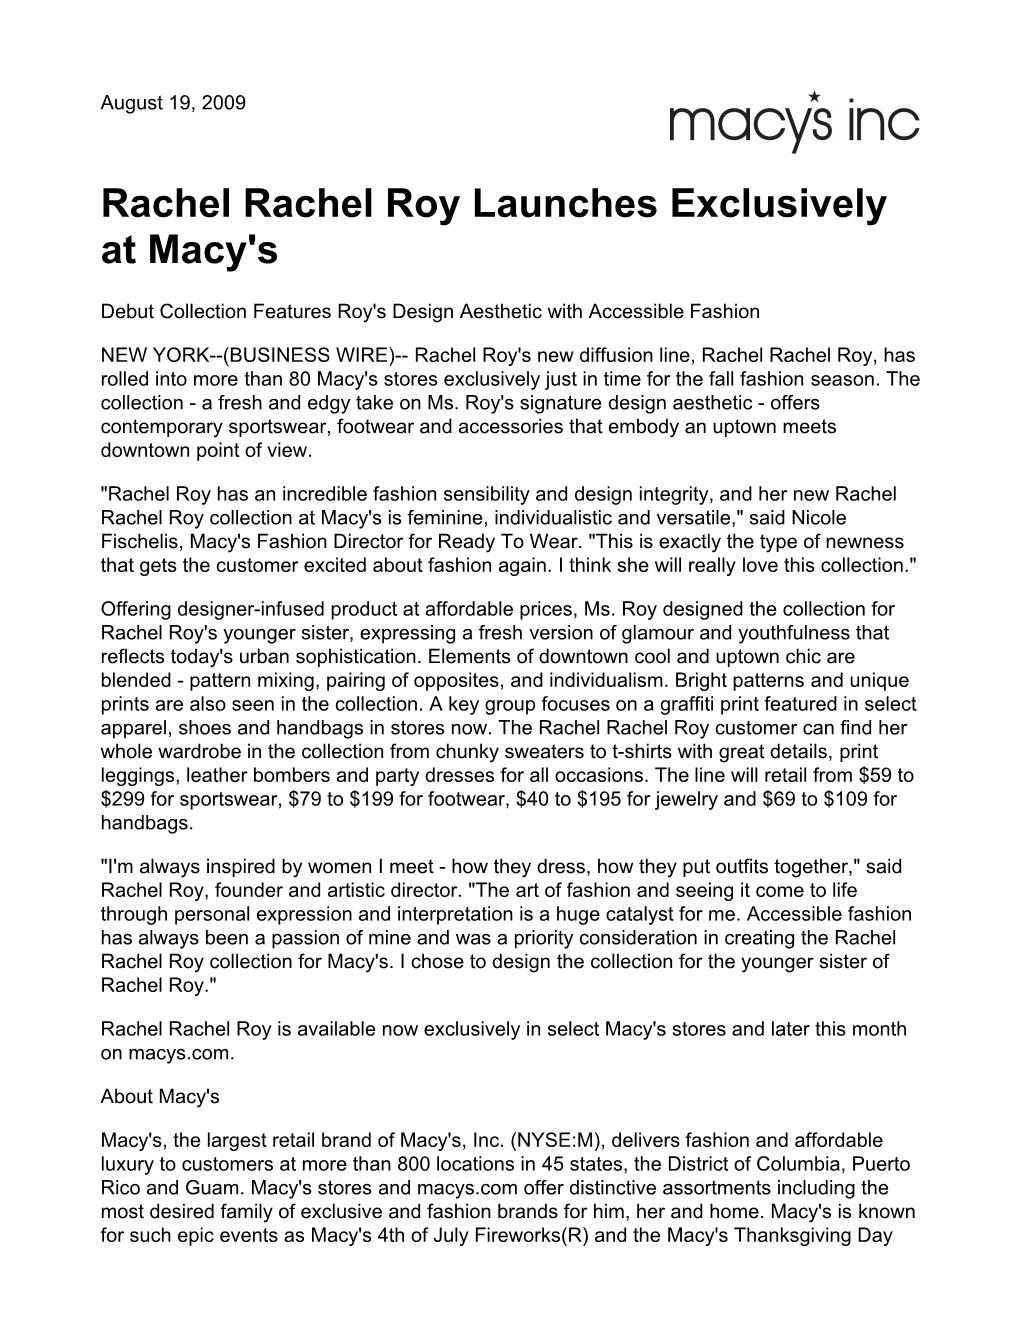 Rachel Rachel Roy Launches Exclusively at Macy's